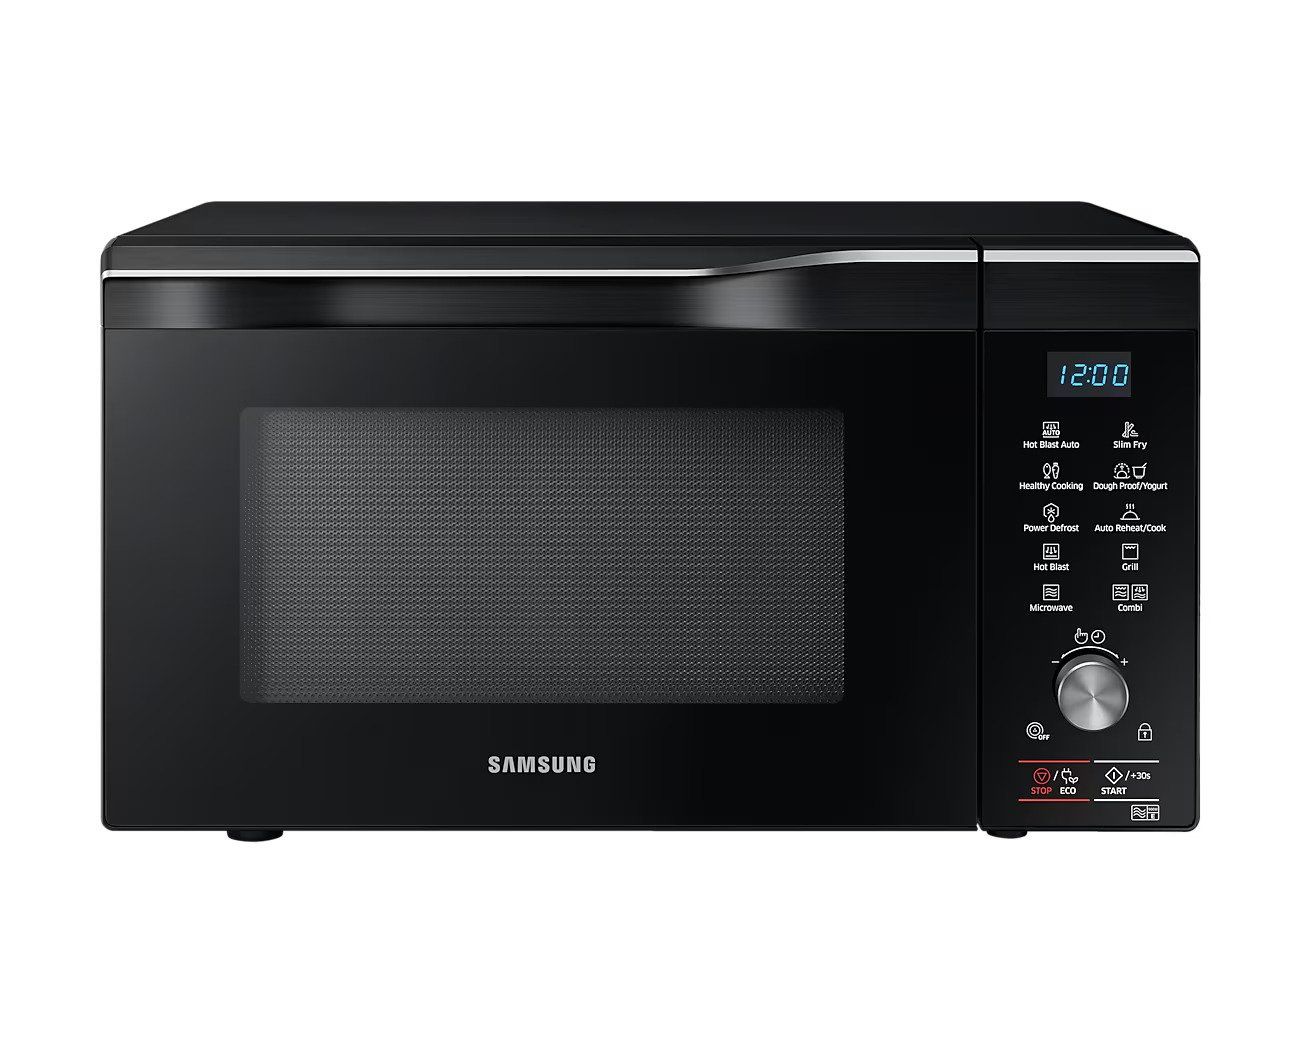 MC32K7055CK/EU / Samsung Convection Microwave Oven, 32L ,1400 W, Black SILVER / 32 L